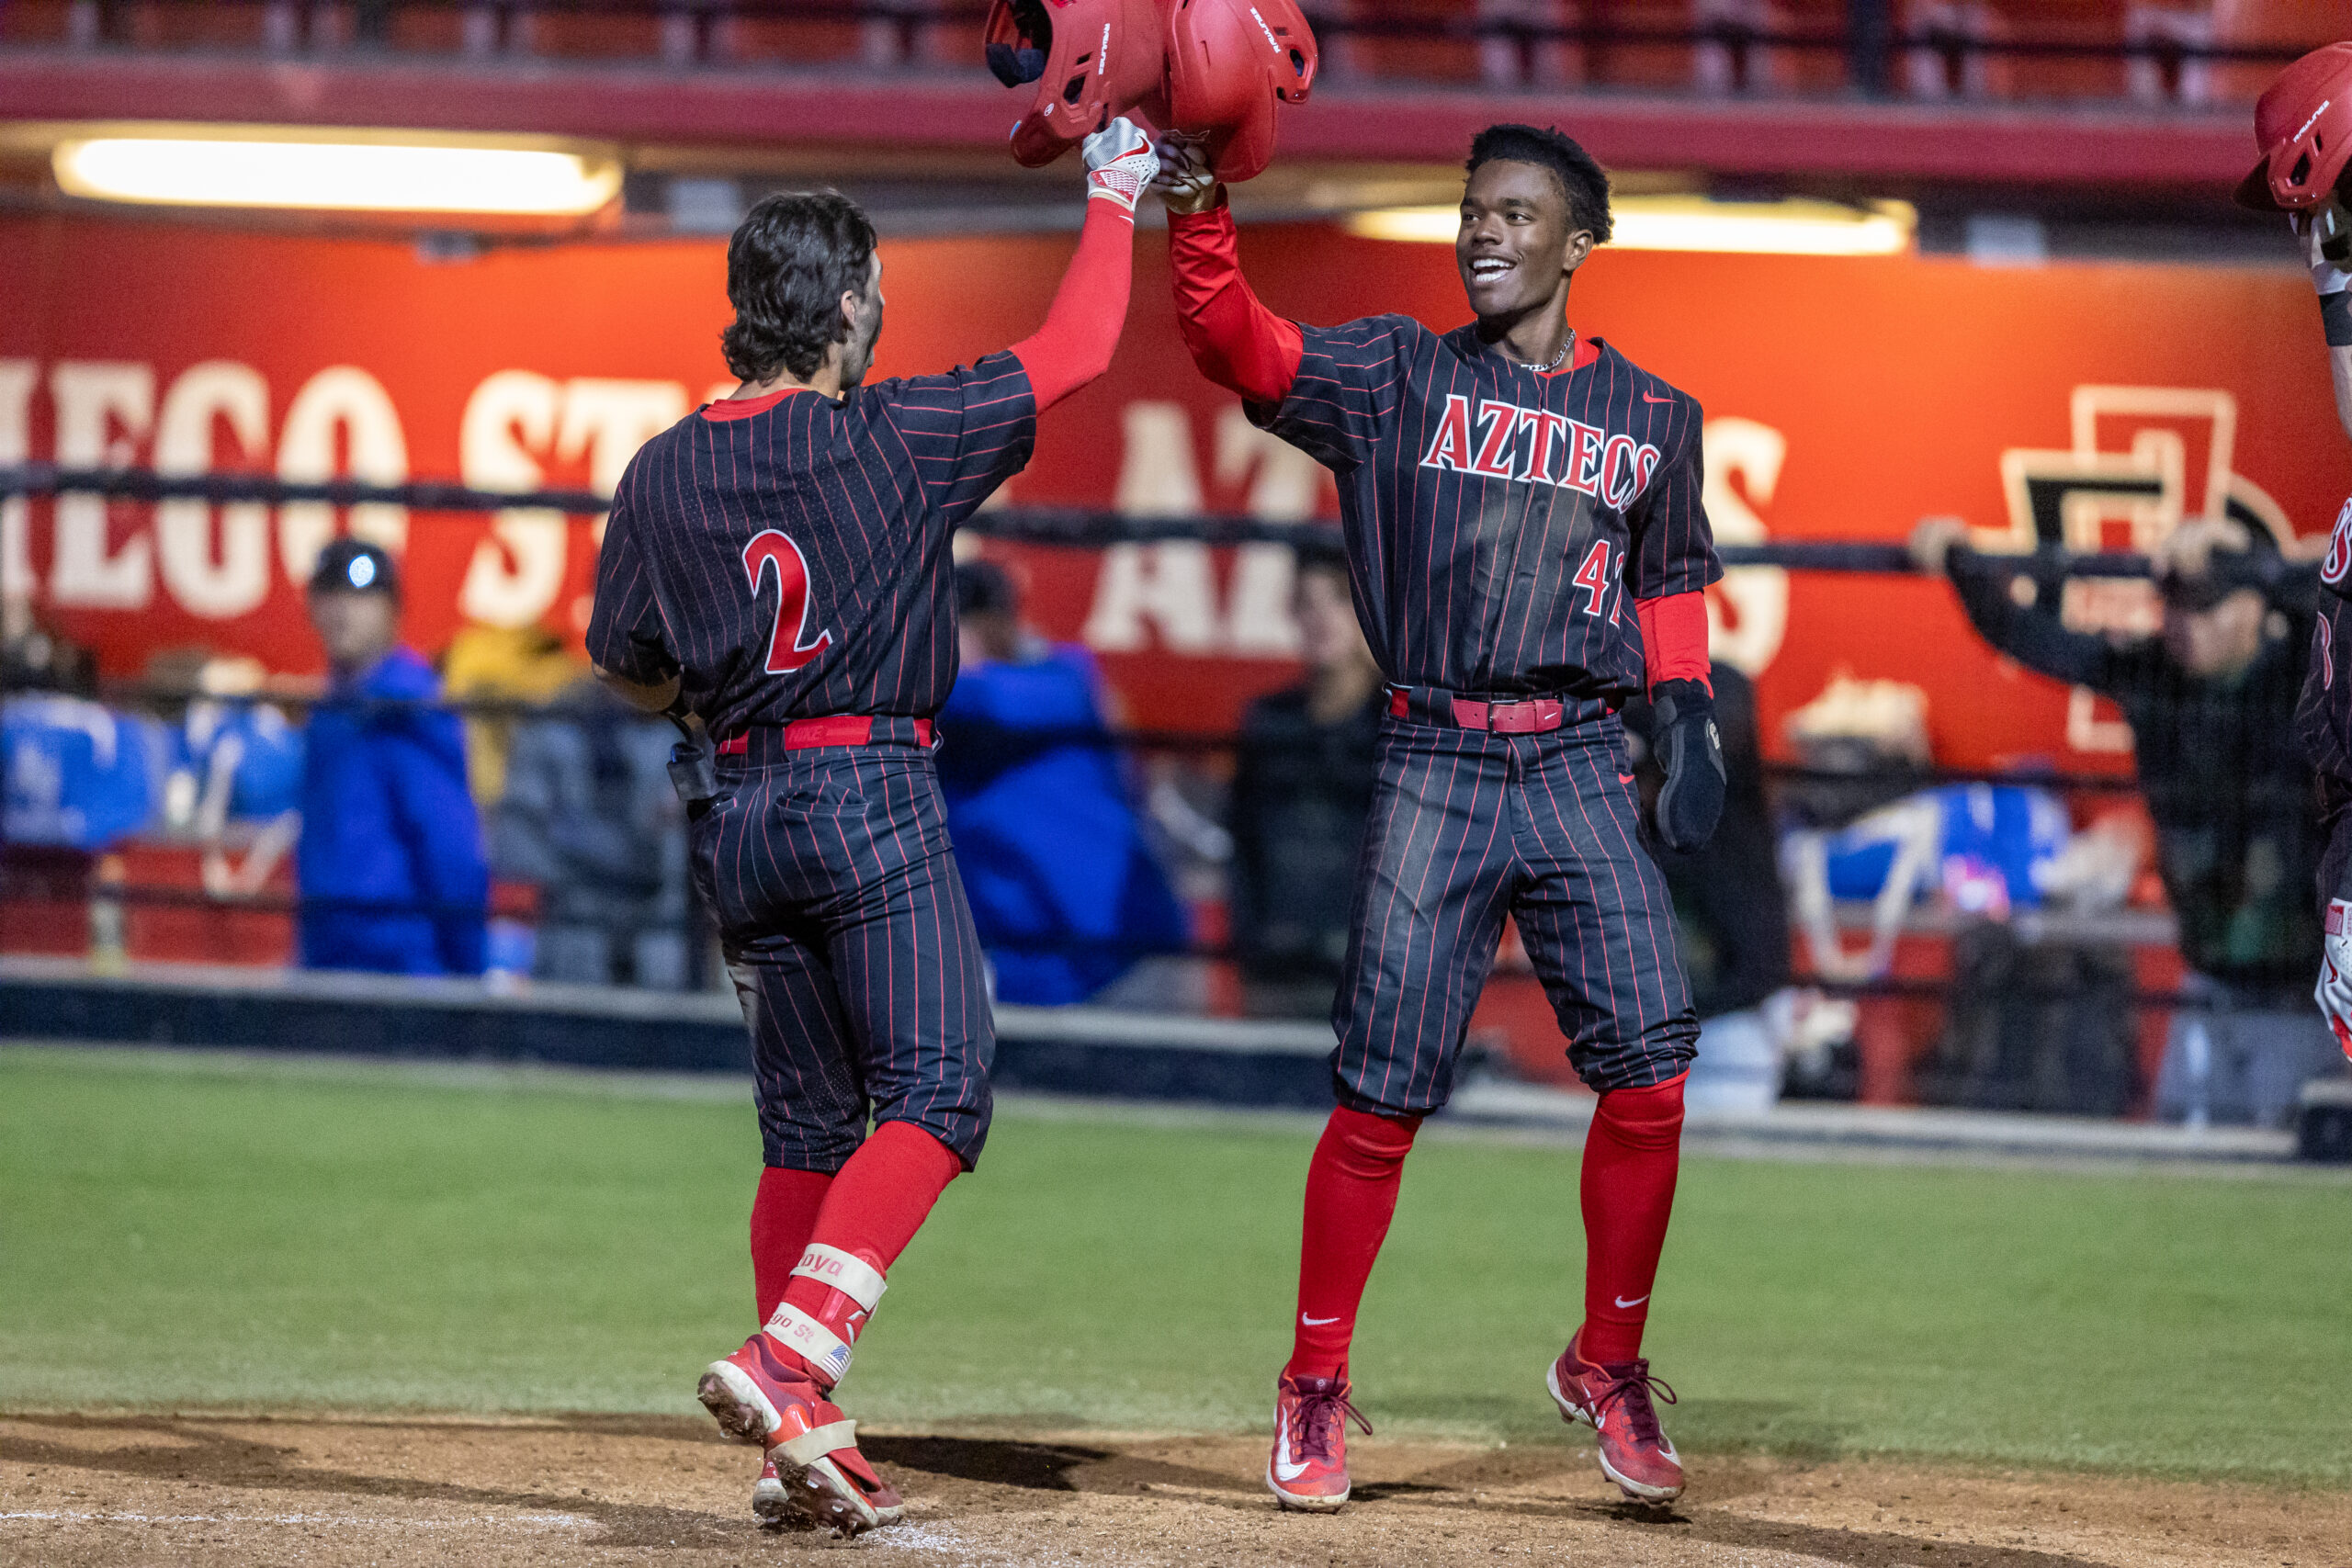 Shaun Cole's vision to take SDSU baseball to the next level